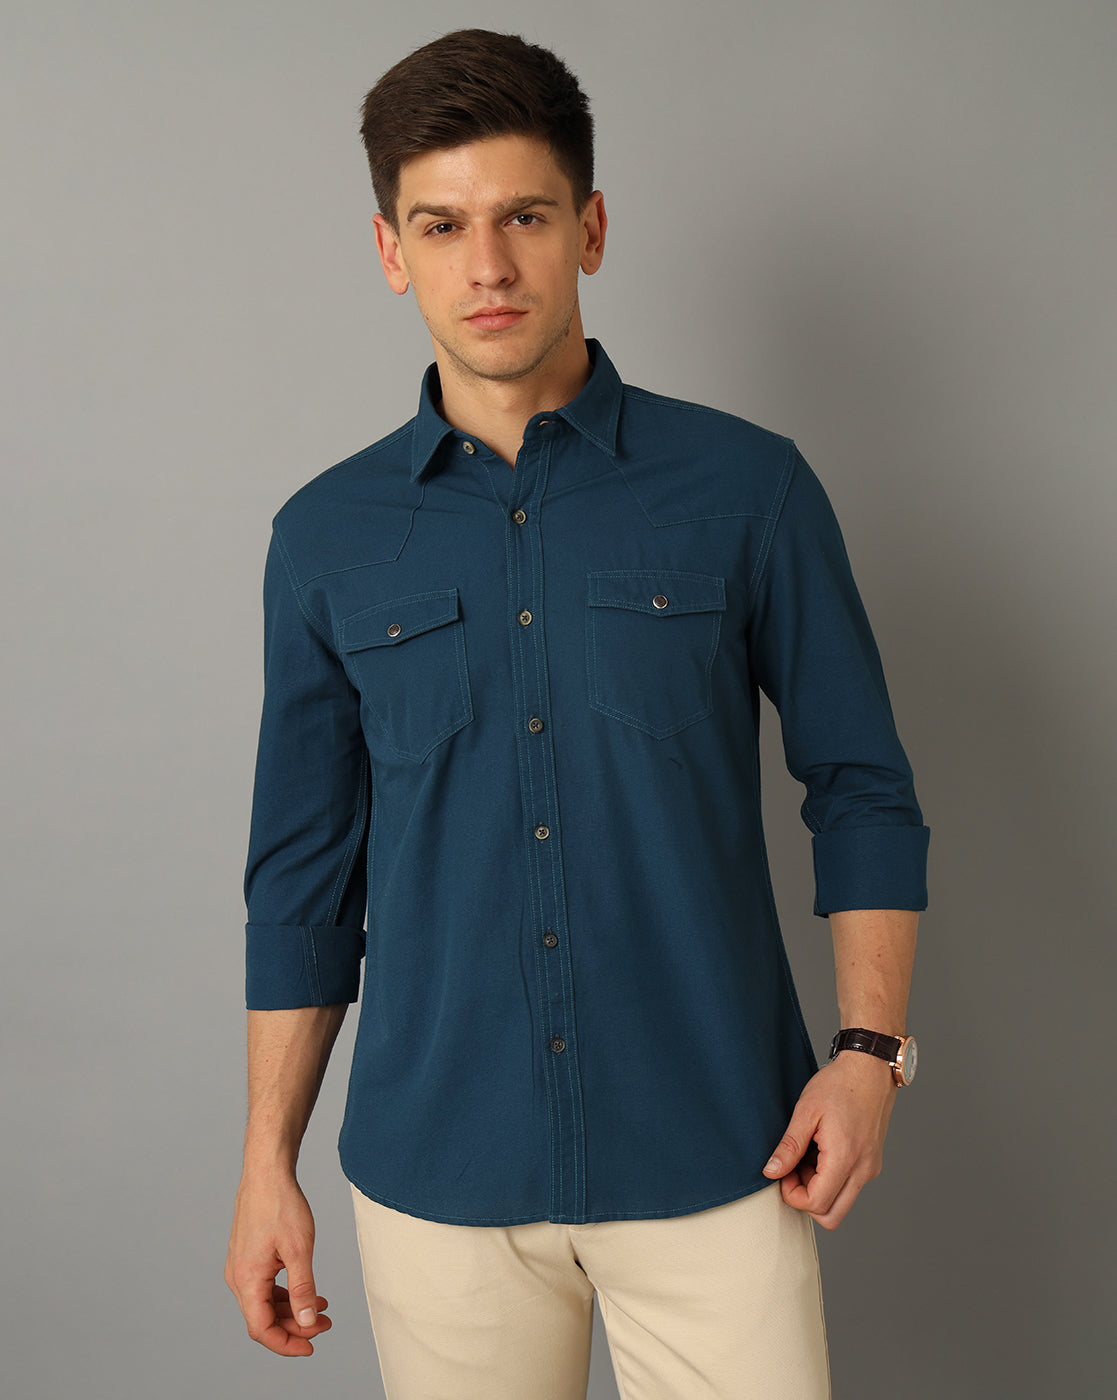 Sapphire blue double pocket shirt